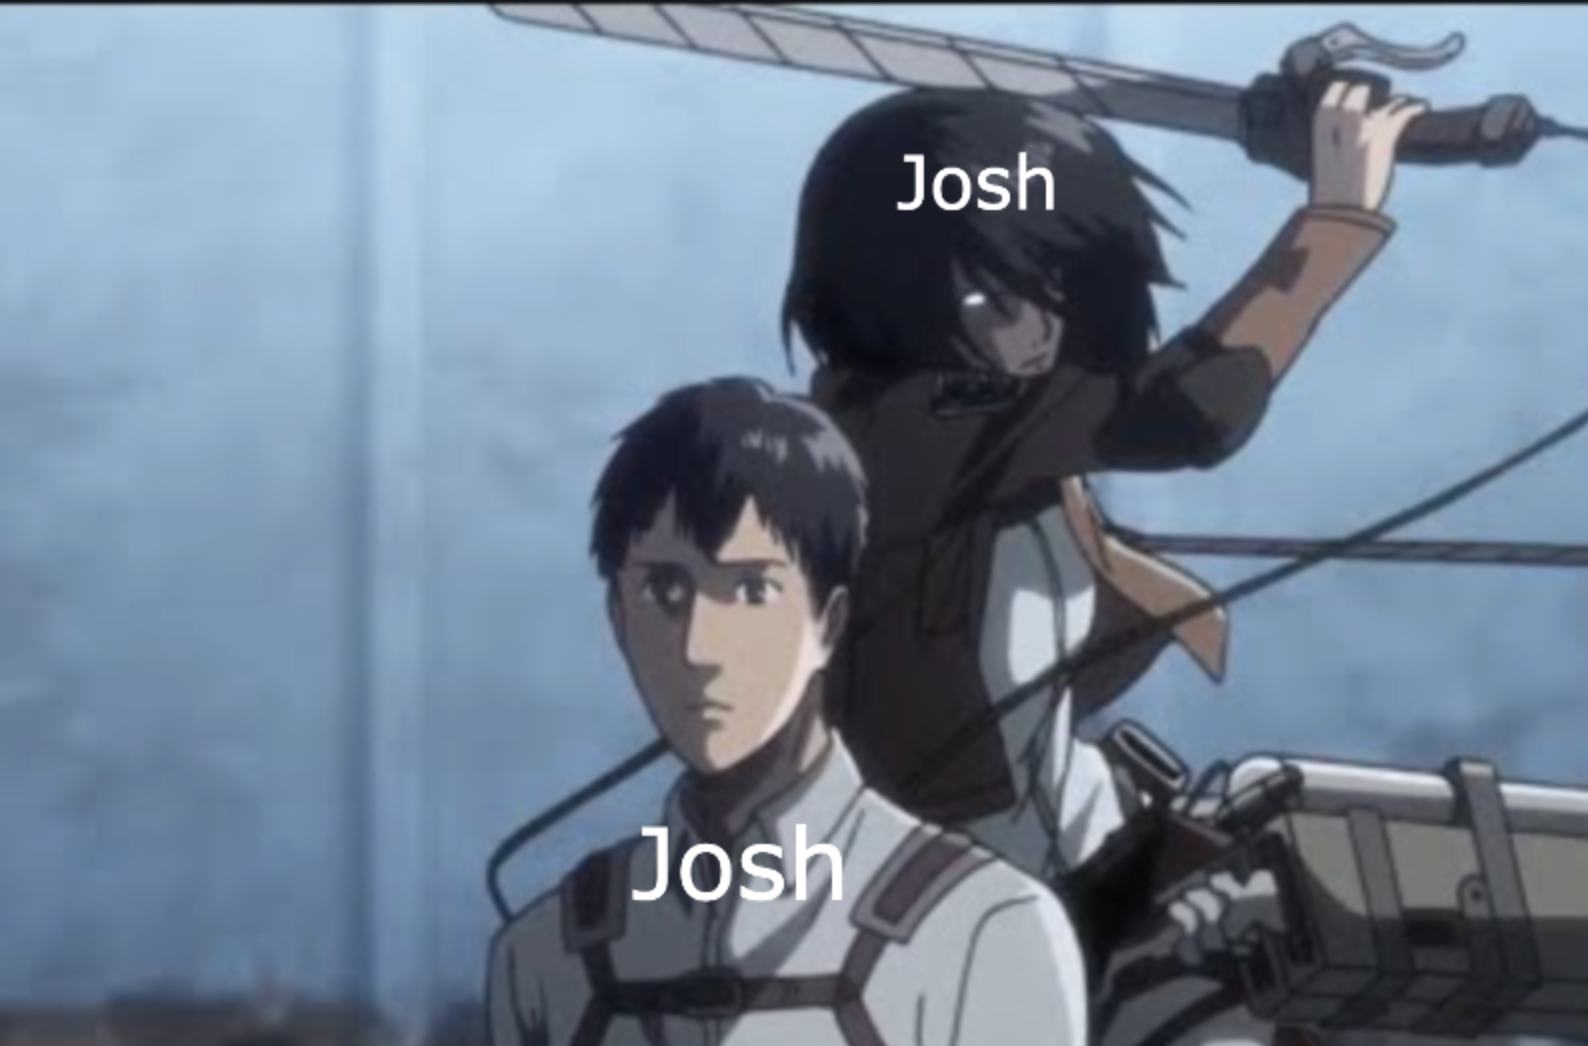 I think Josh will win